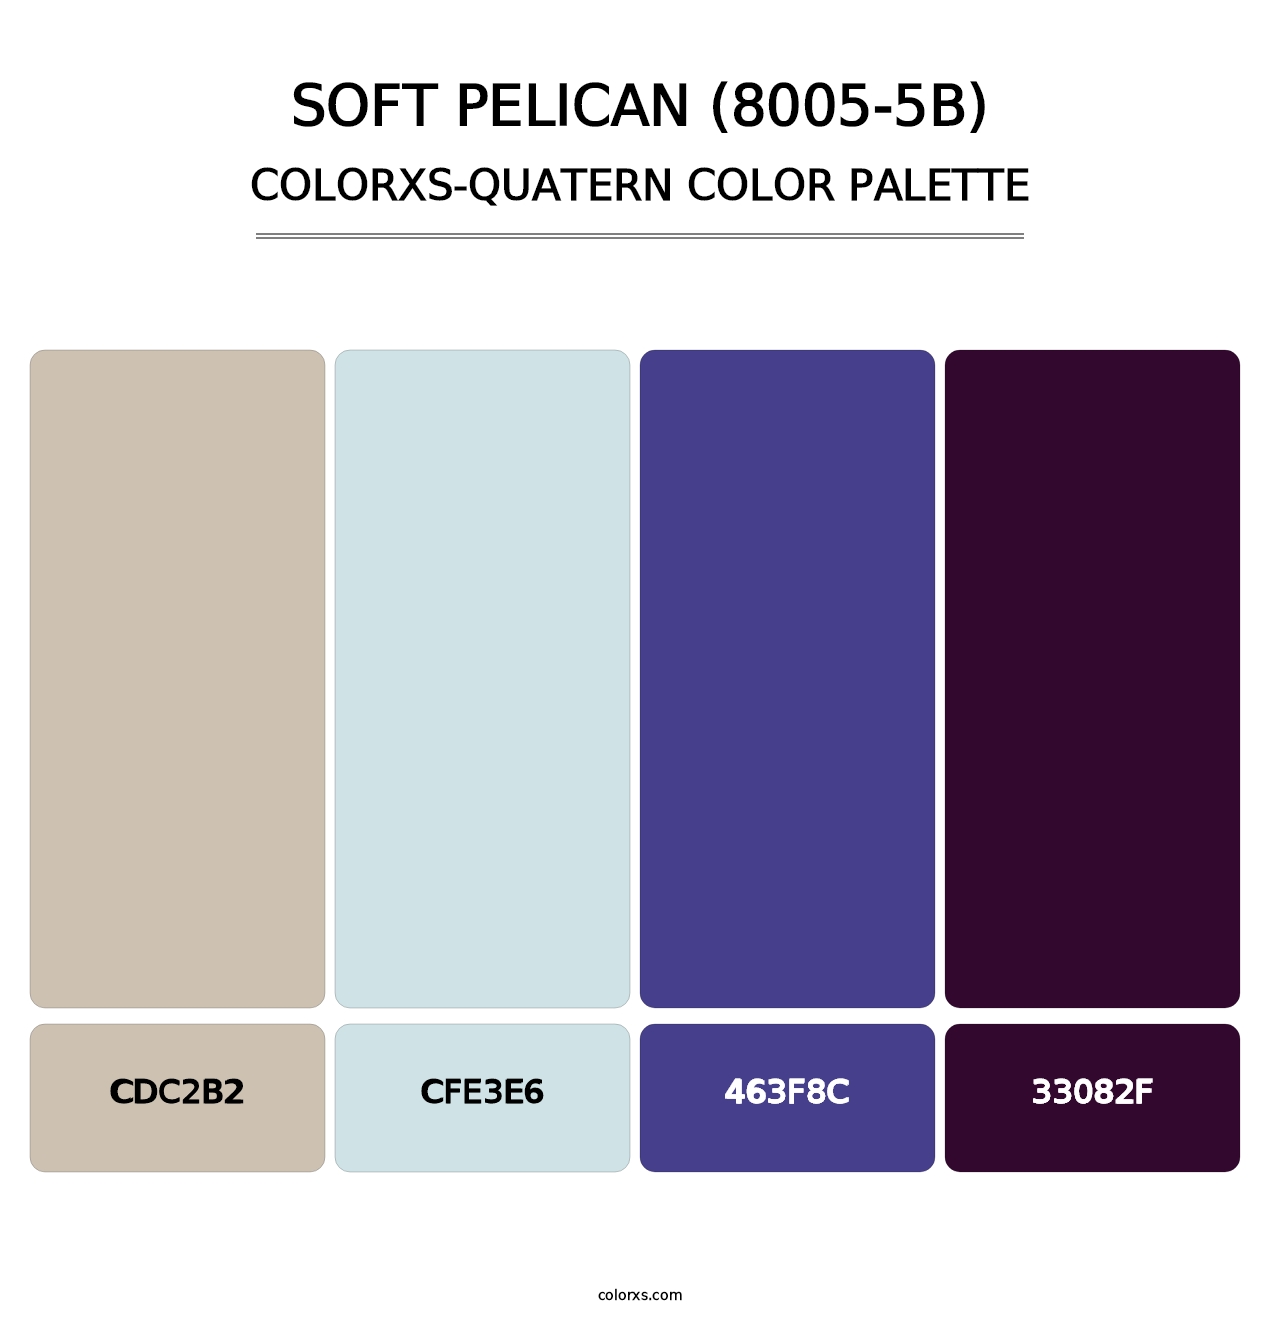 Soft Pelican (8005-5B) - Colorxs Quatern Palette